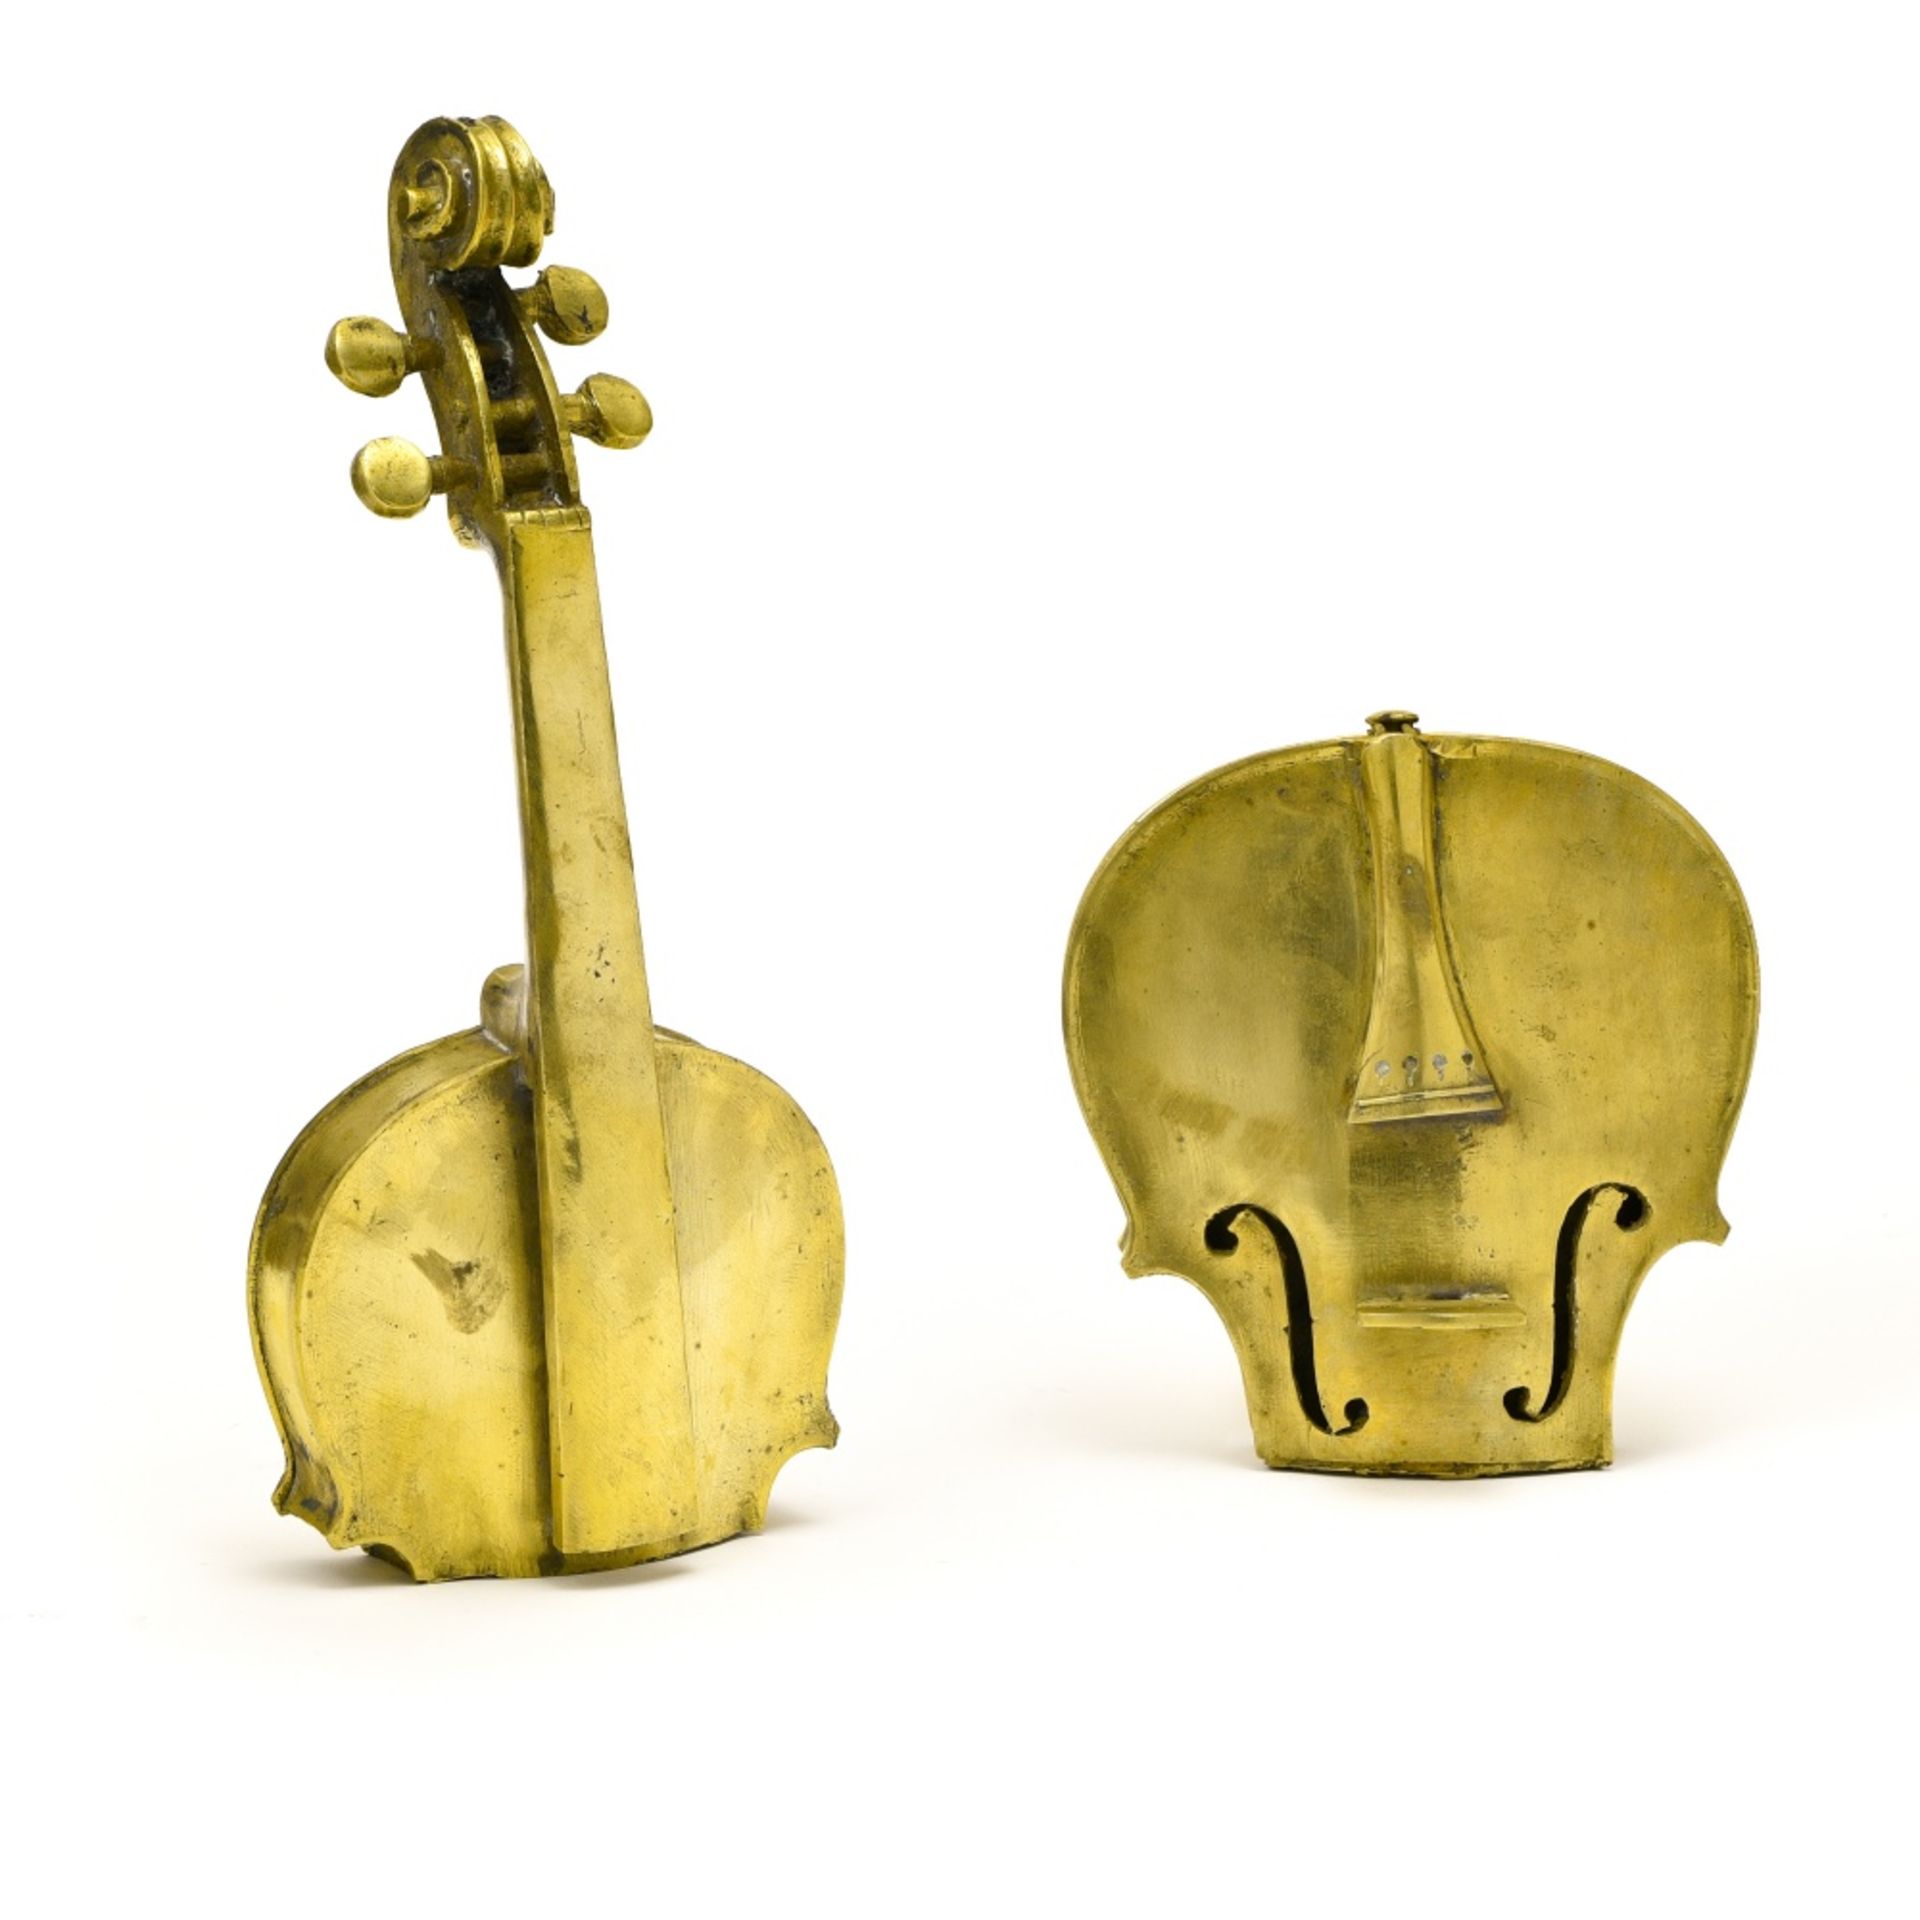 ARMAN (1928-2005) Halved violin, 1972, Polished gilt bronze sculpture, numbered 114/150 with